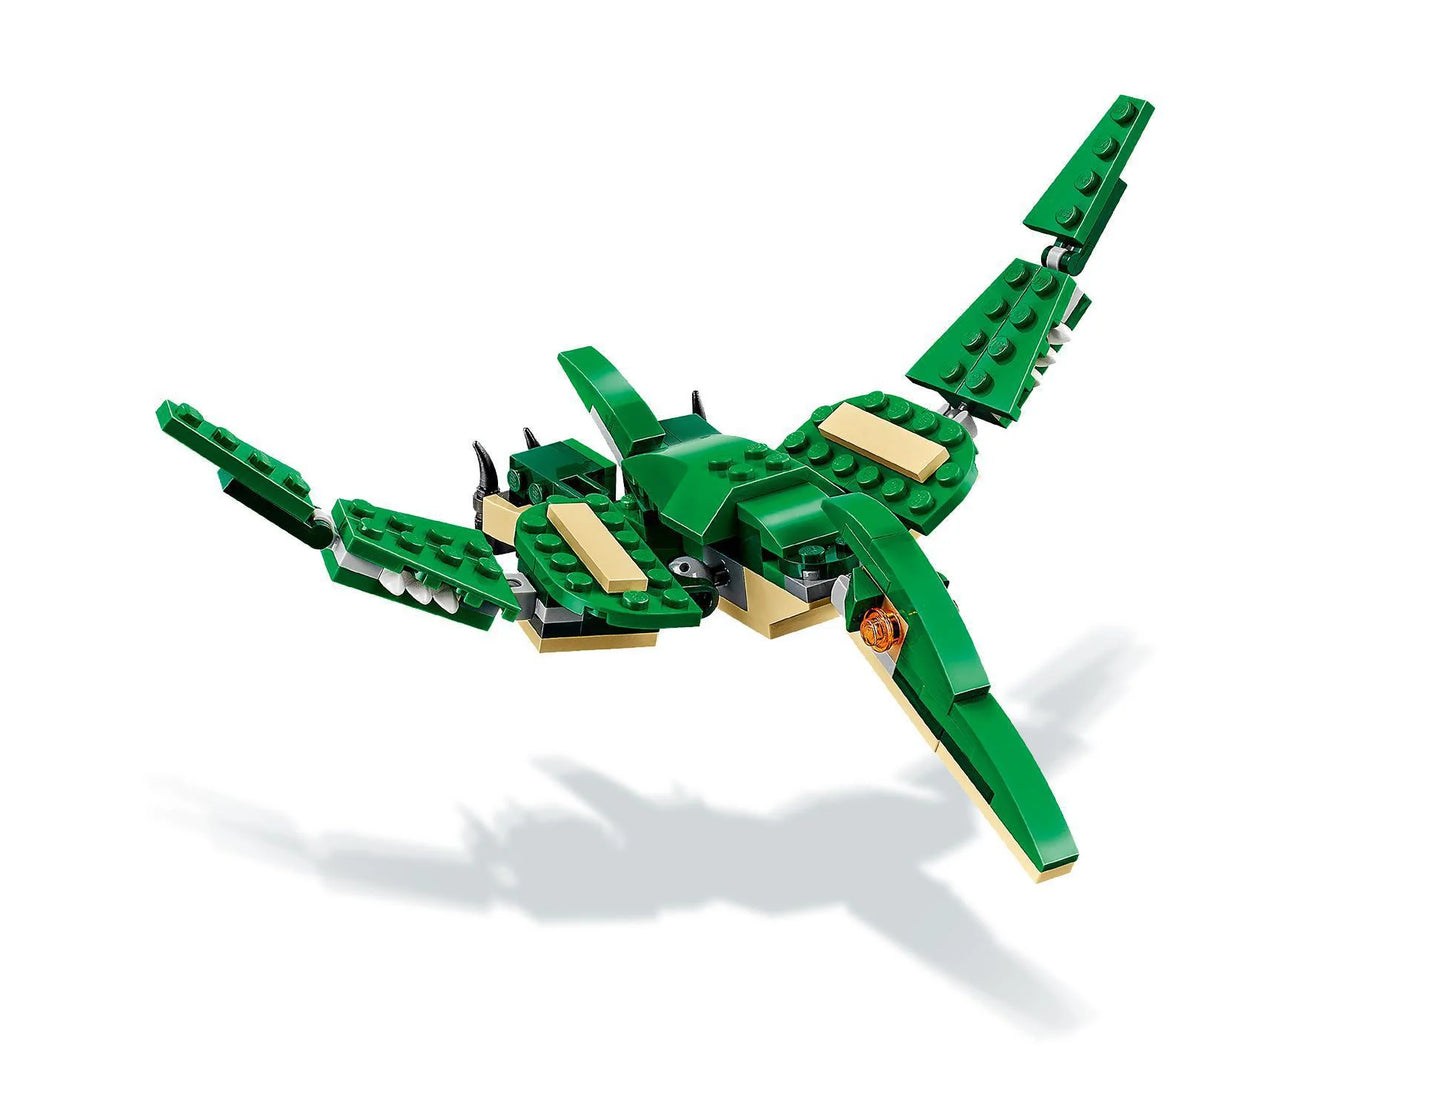 Mighty Dinosaurs LEGO Creator